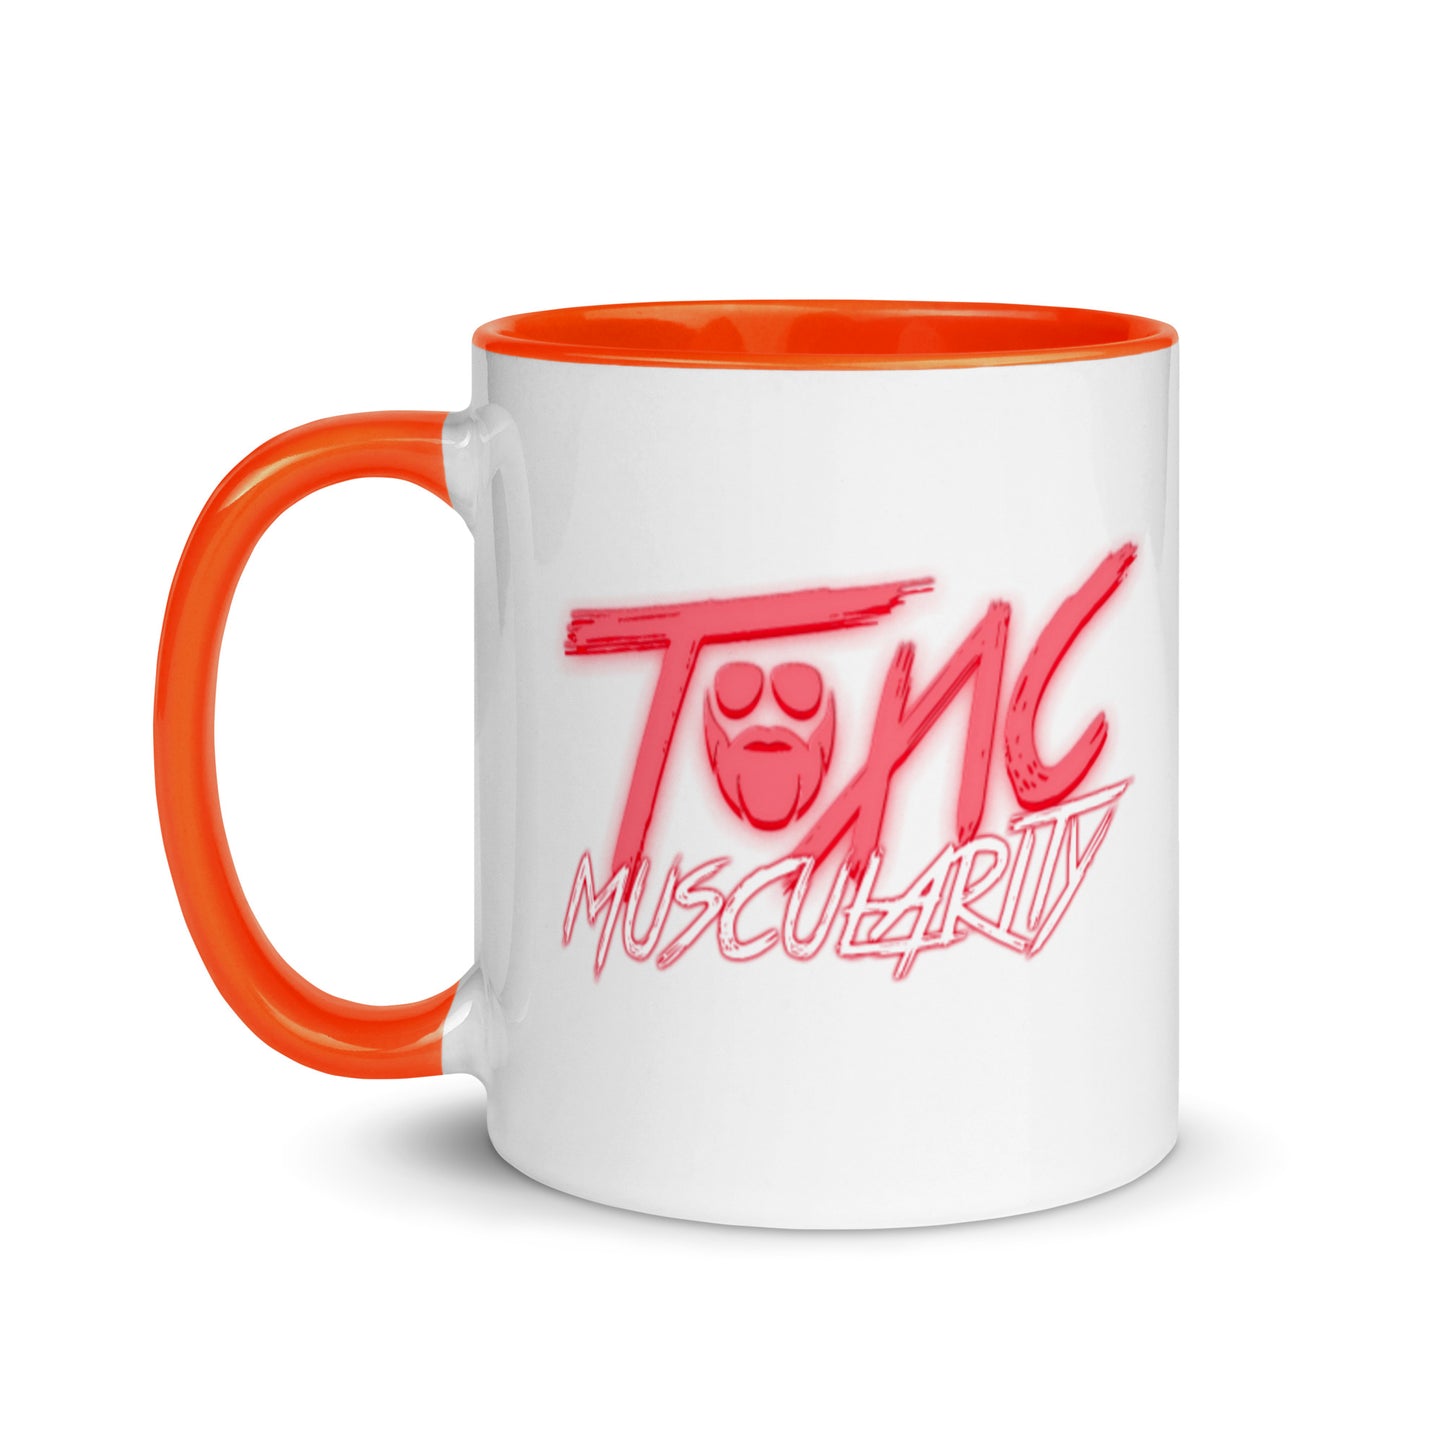 Toxic Muscularity Mug